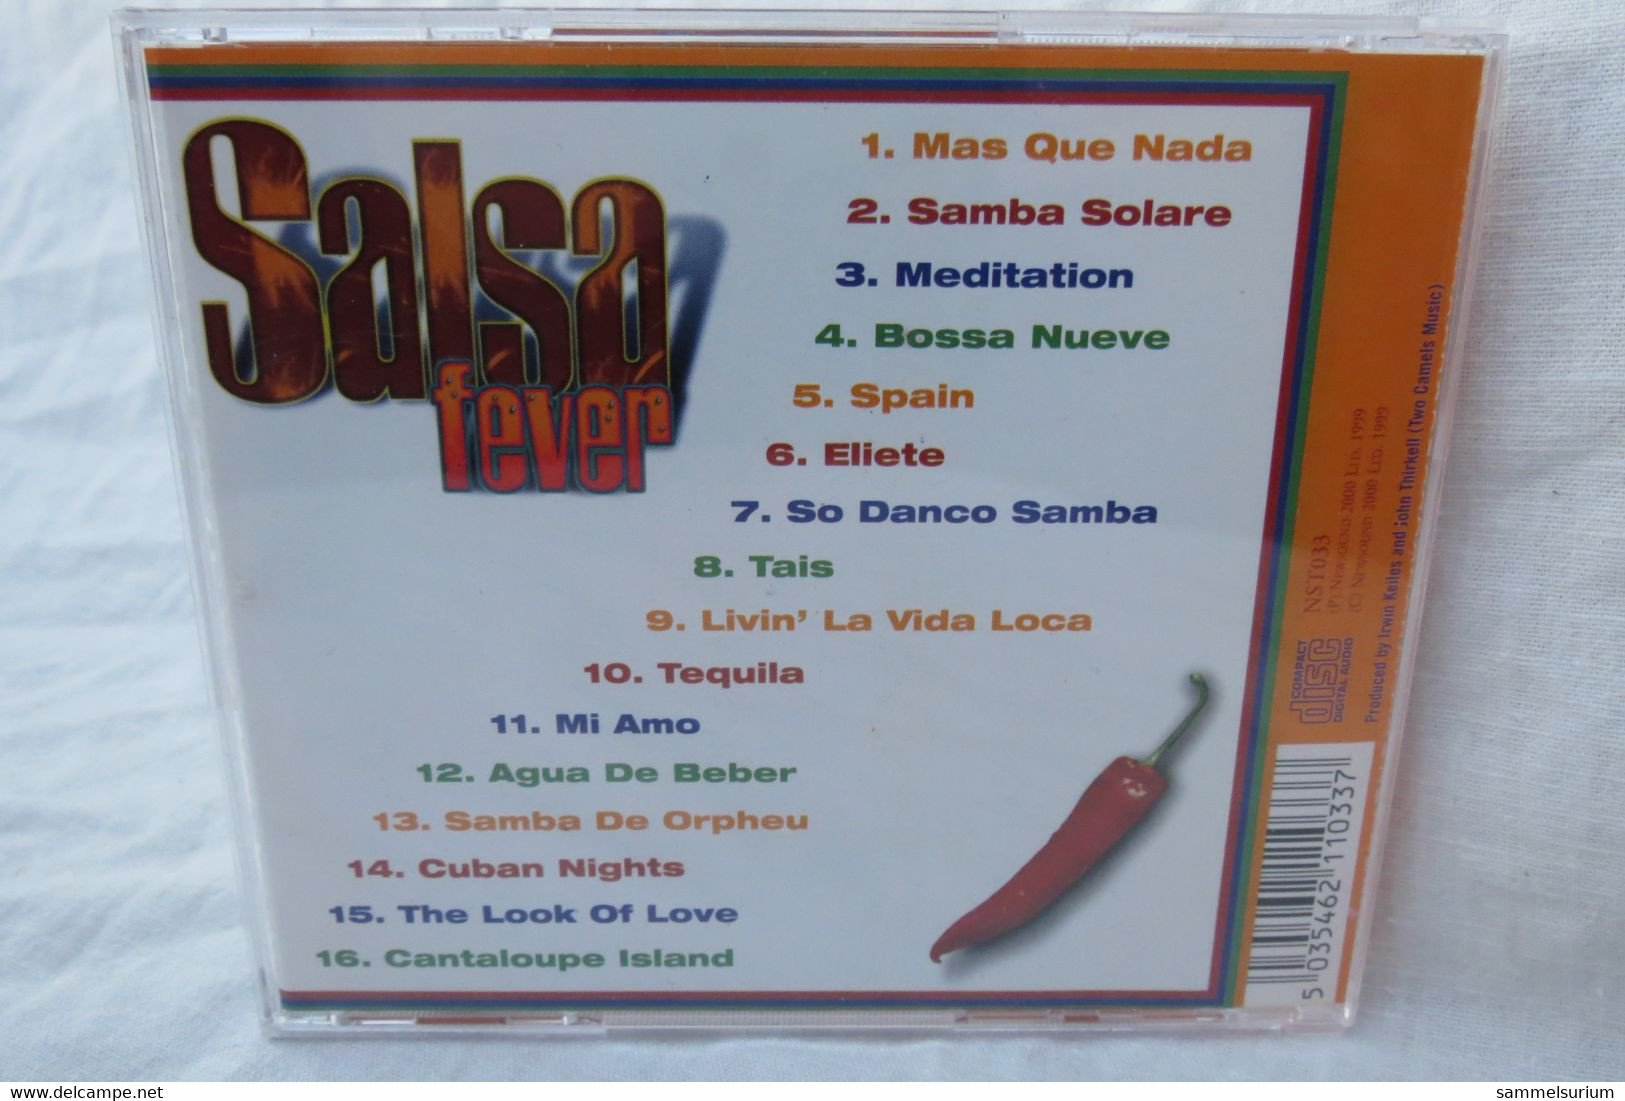 CD "Salsa Fever" 16 Of The Hottest Salsa Anthems - Compilaciones